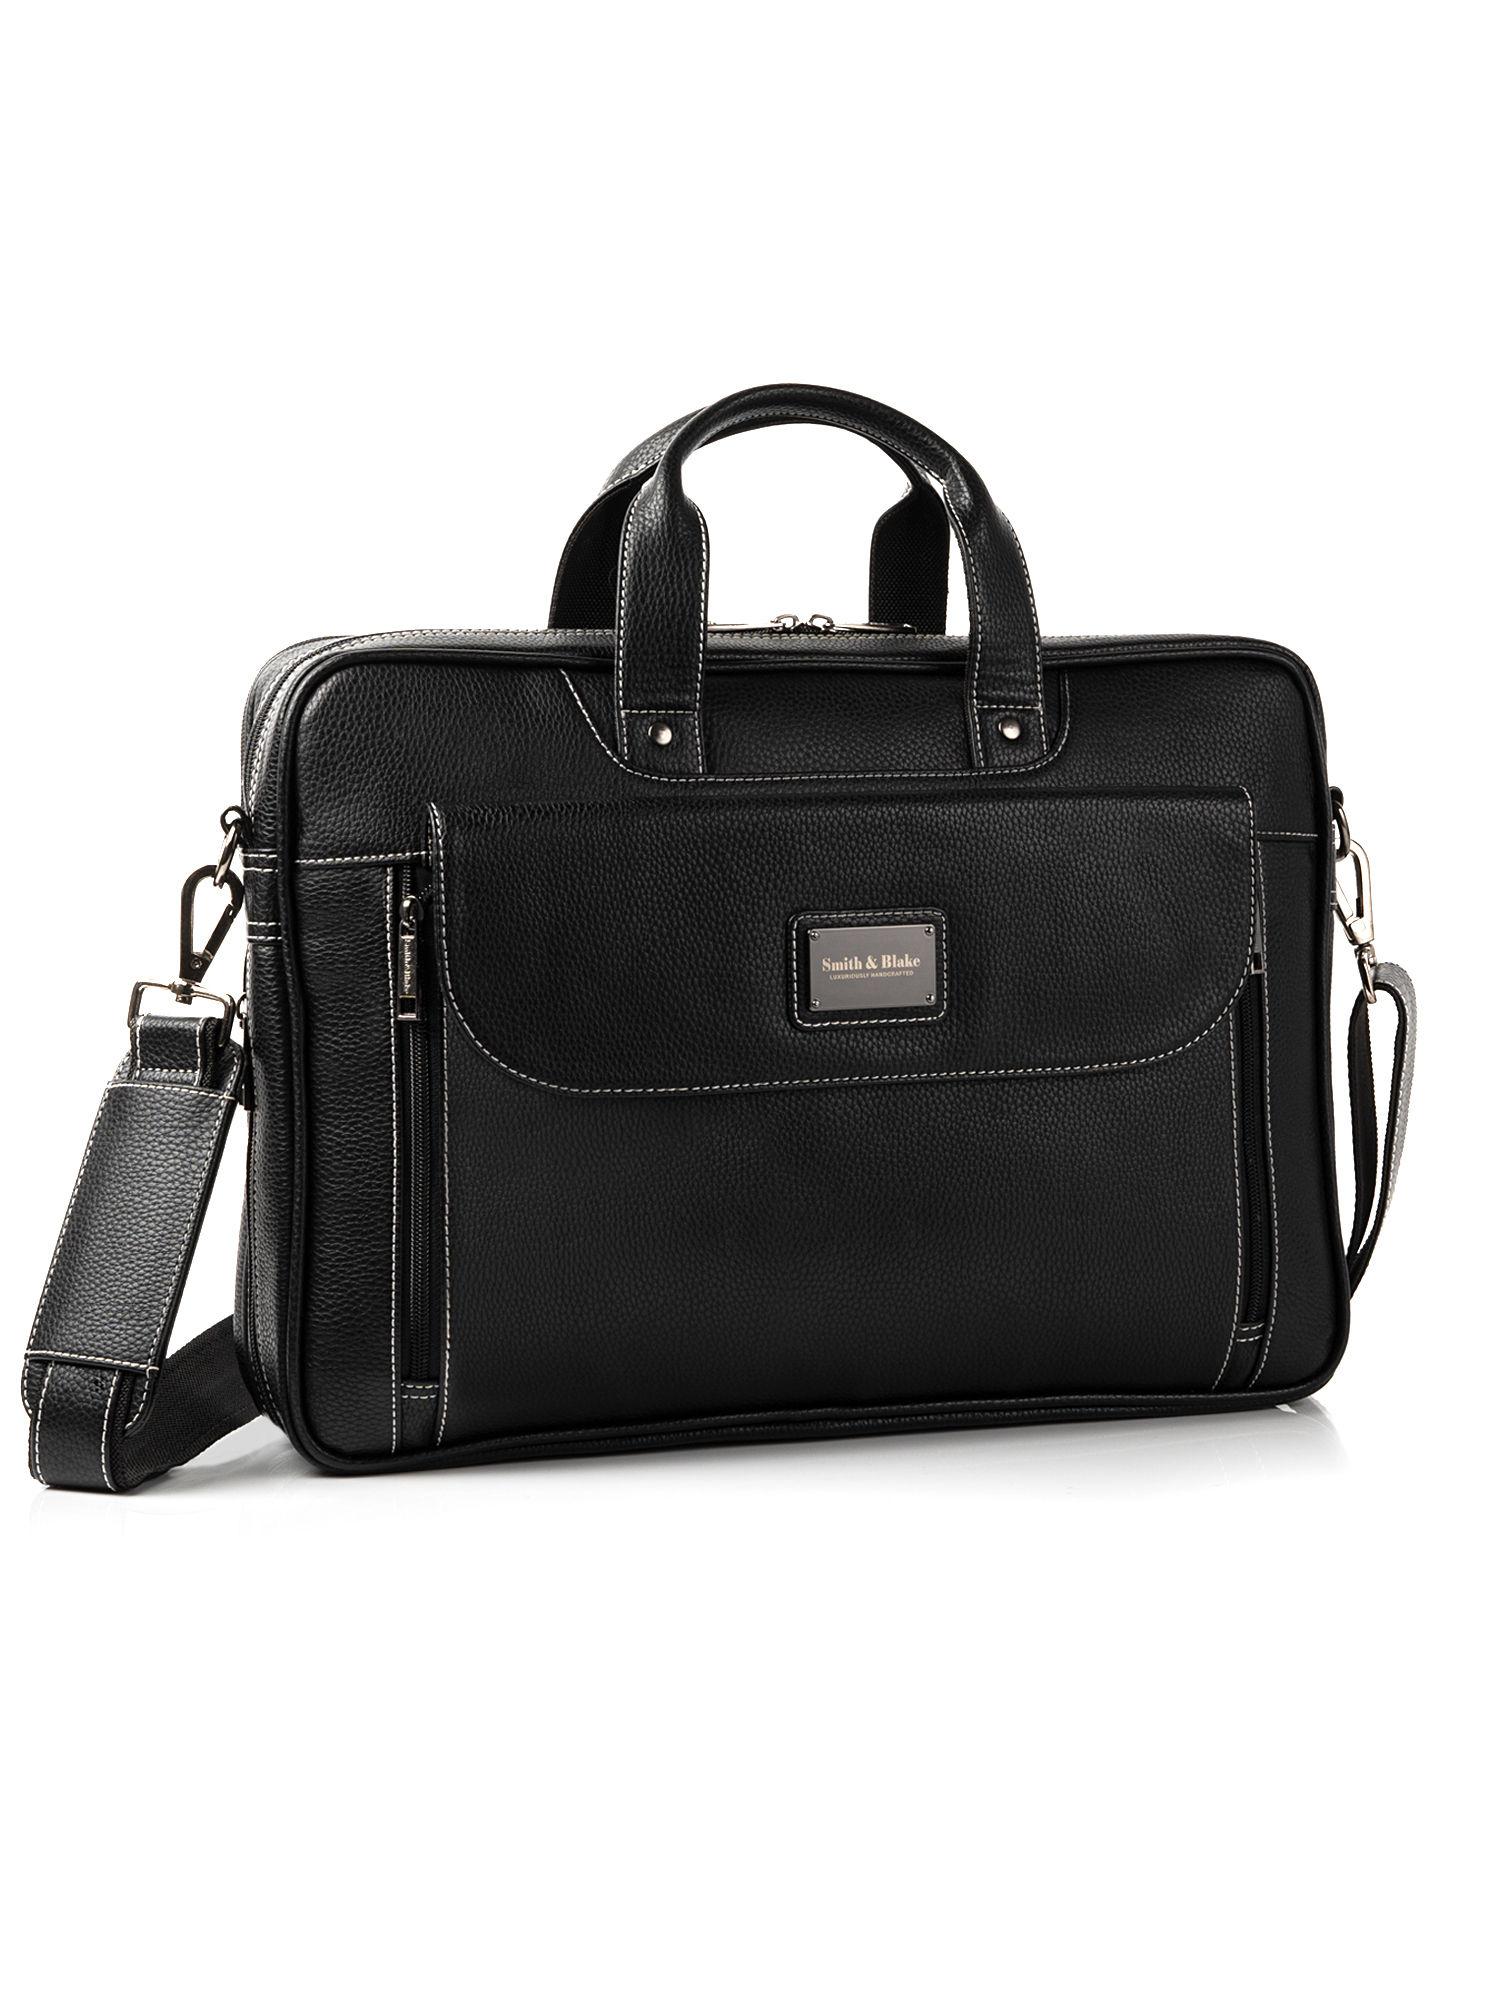 messenger bag double compartment black leatherette florence